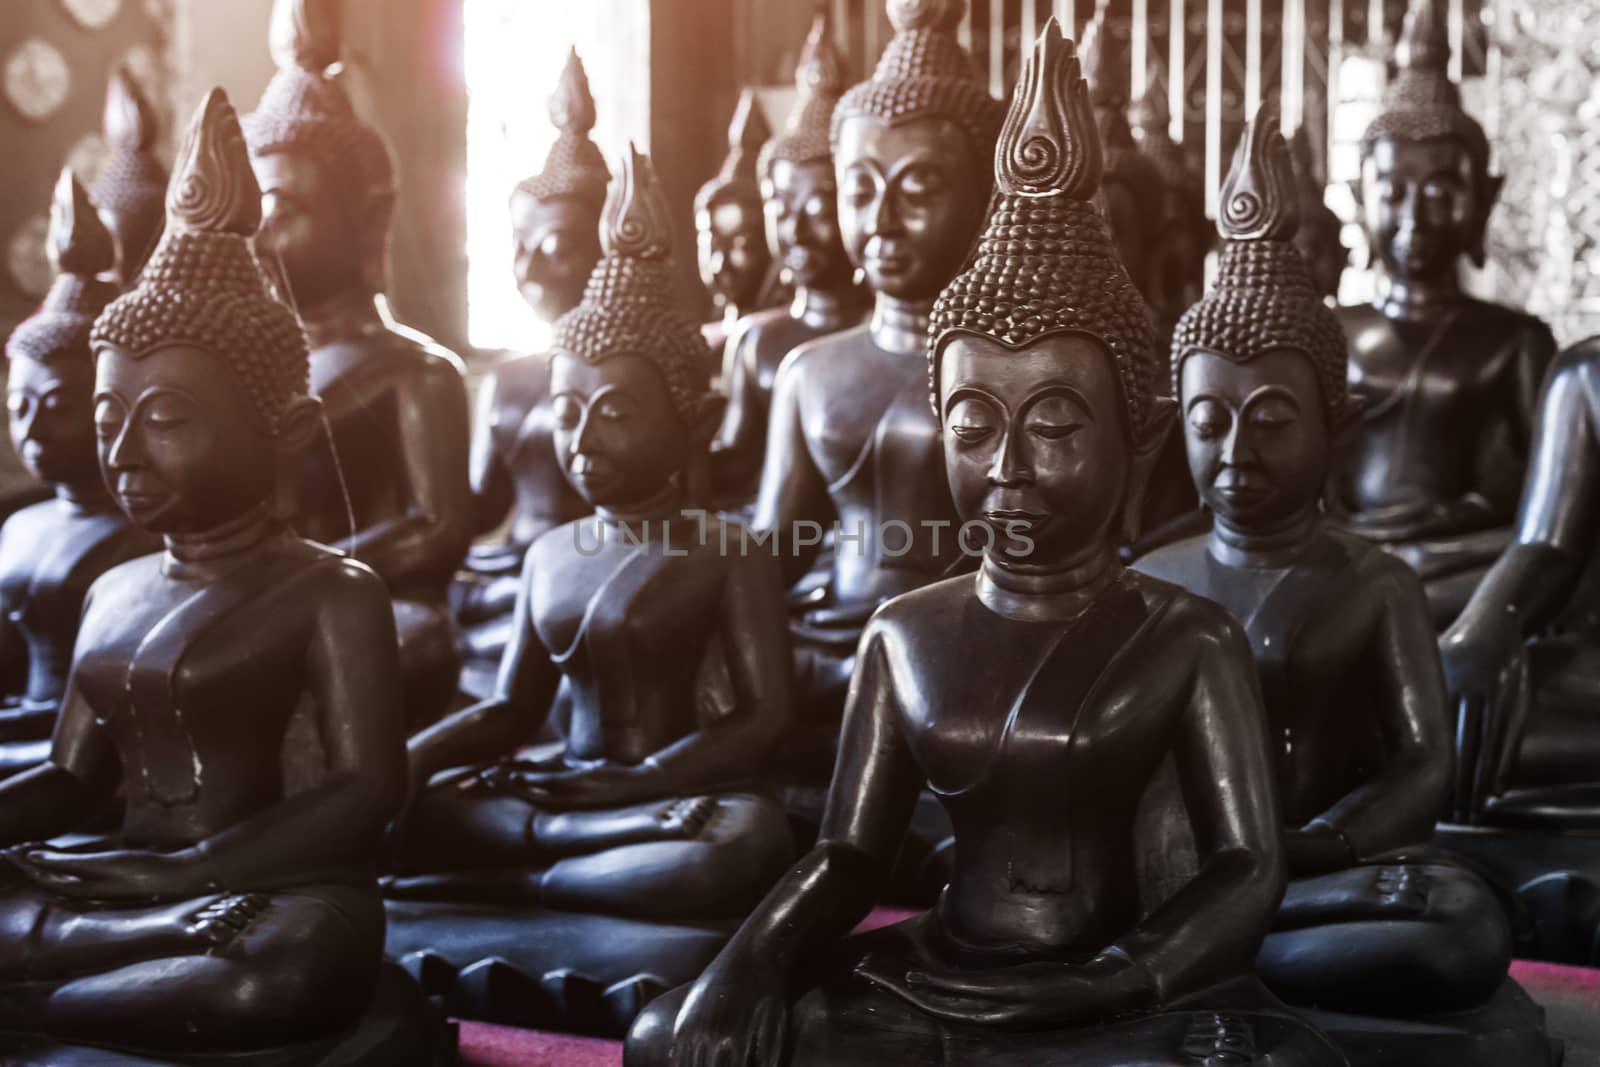 Black Buddha statues by nopparats